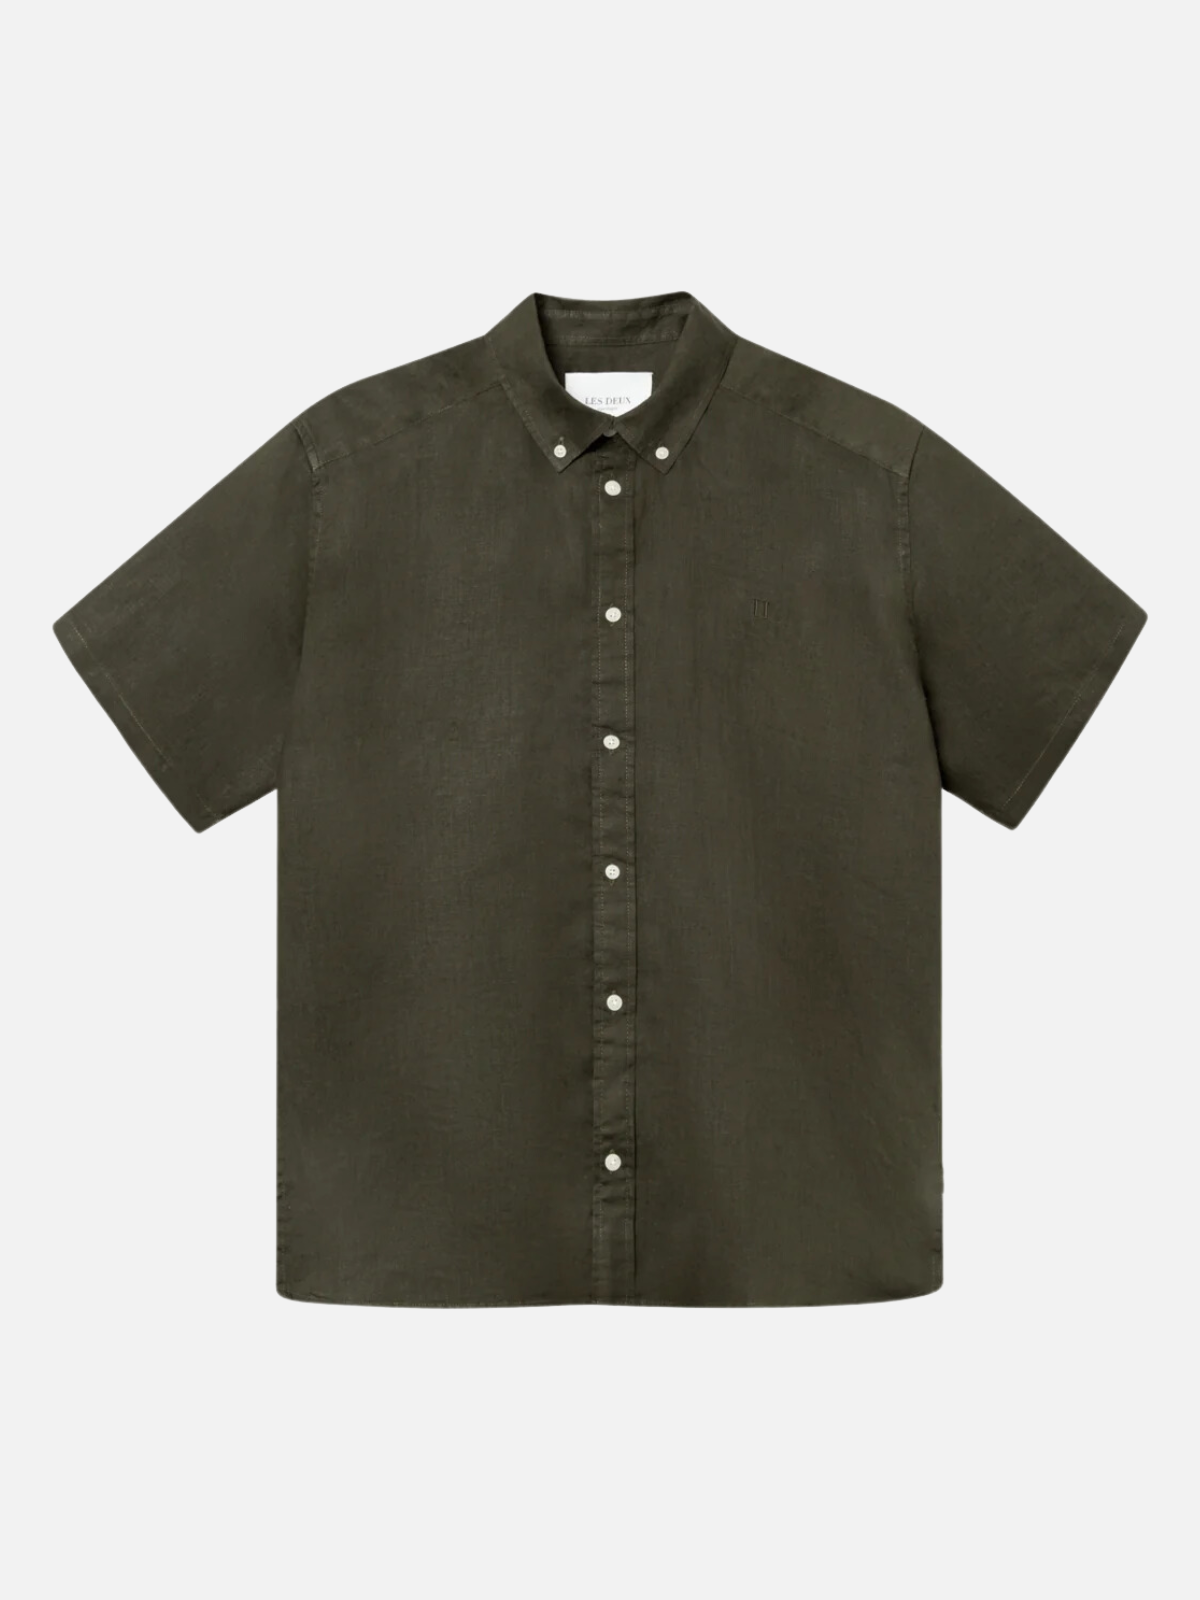 les deux kris linen ss short sleeve shirt dark green olive night 100% linen button down kempt athens ga georgia men's clothing store